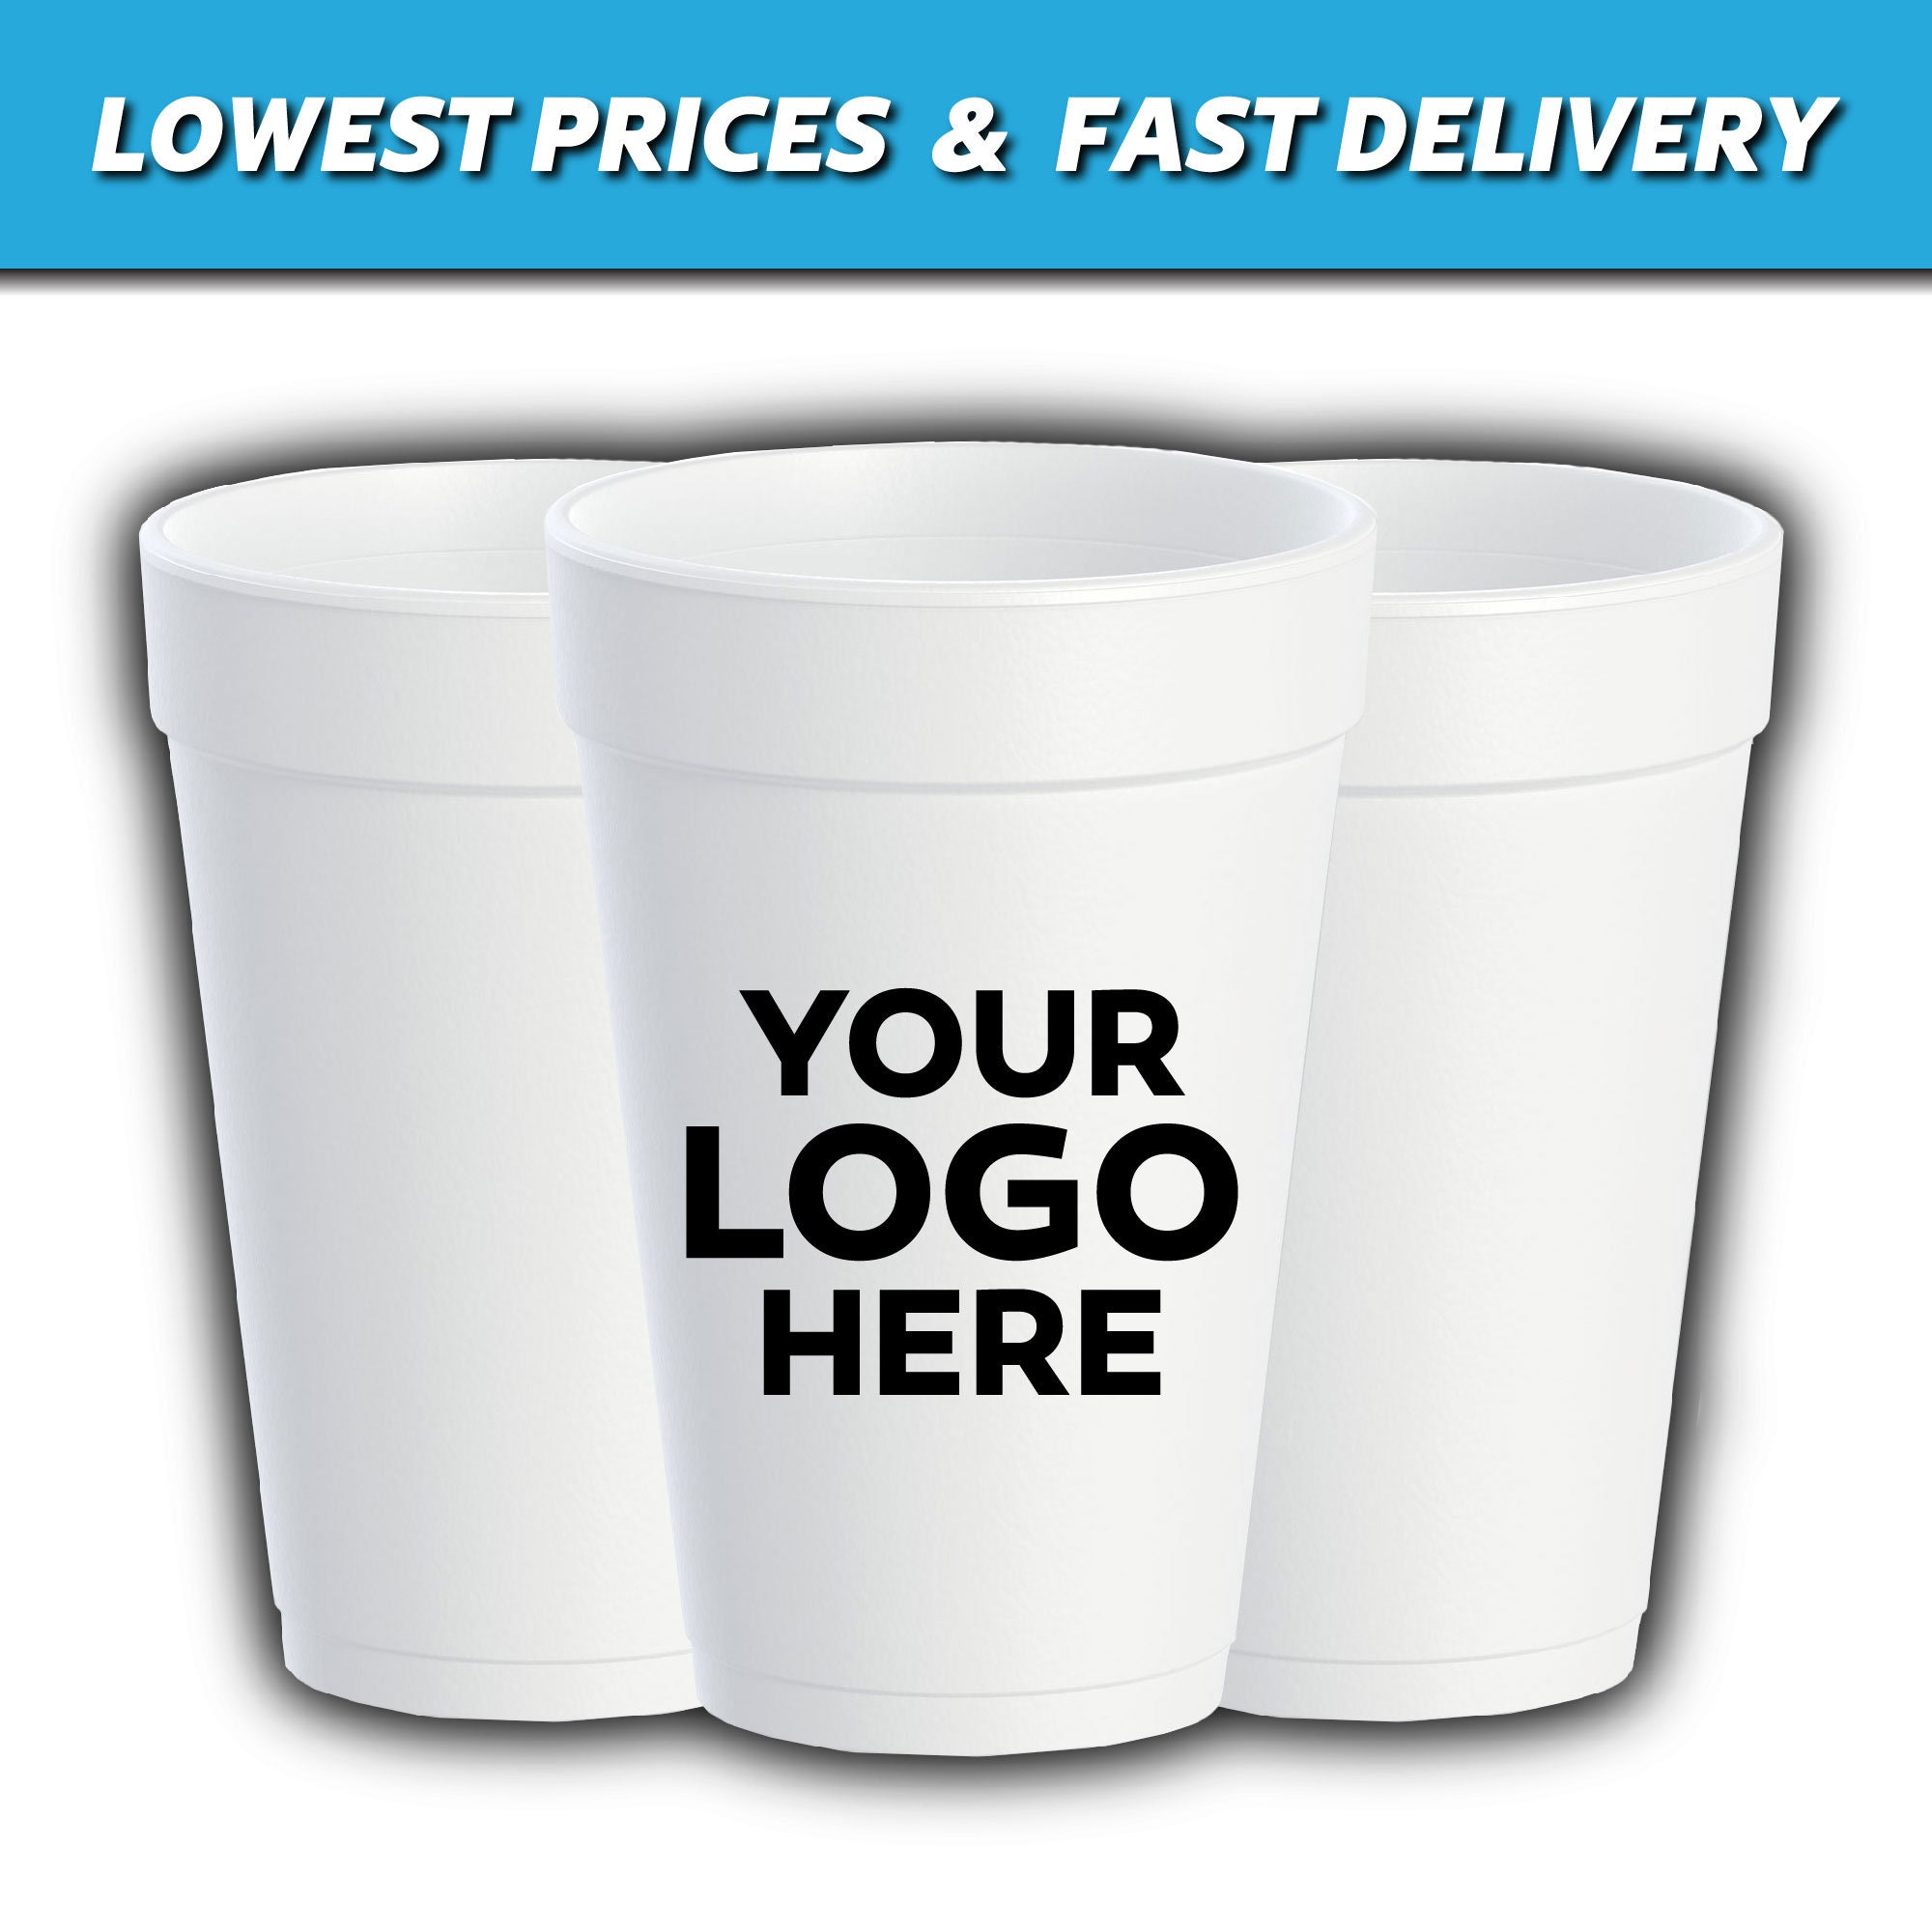 Styrofoam Cups 20 oz Happy Birthday – Scentimentals Boutique